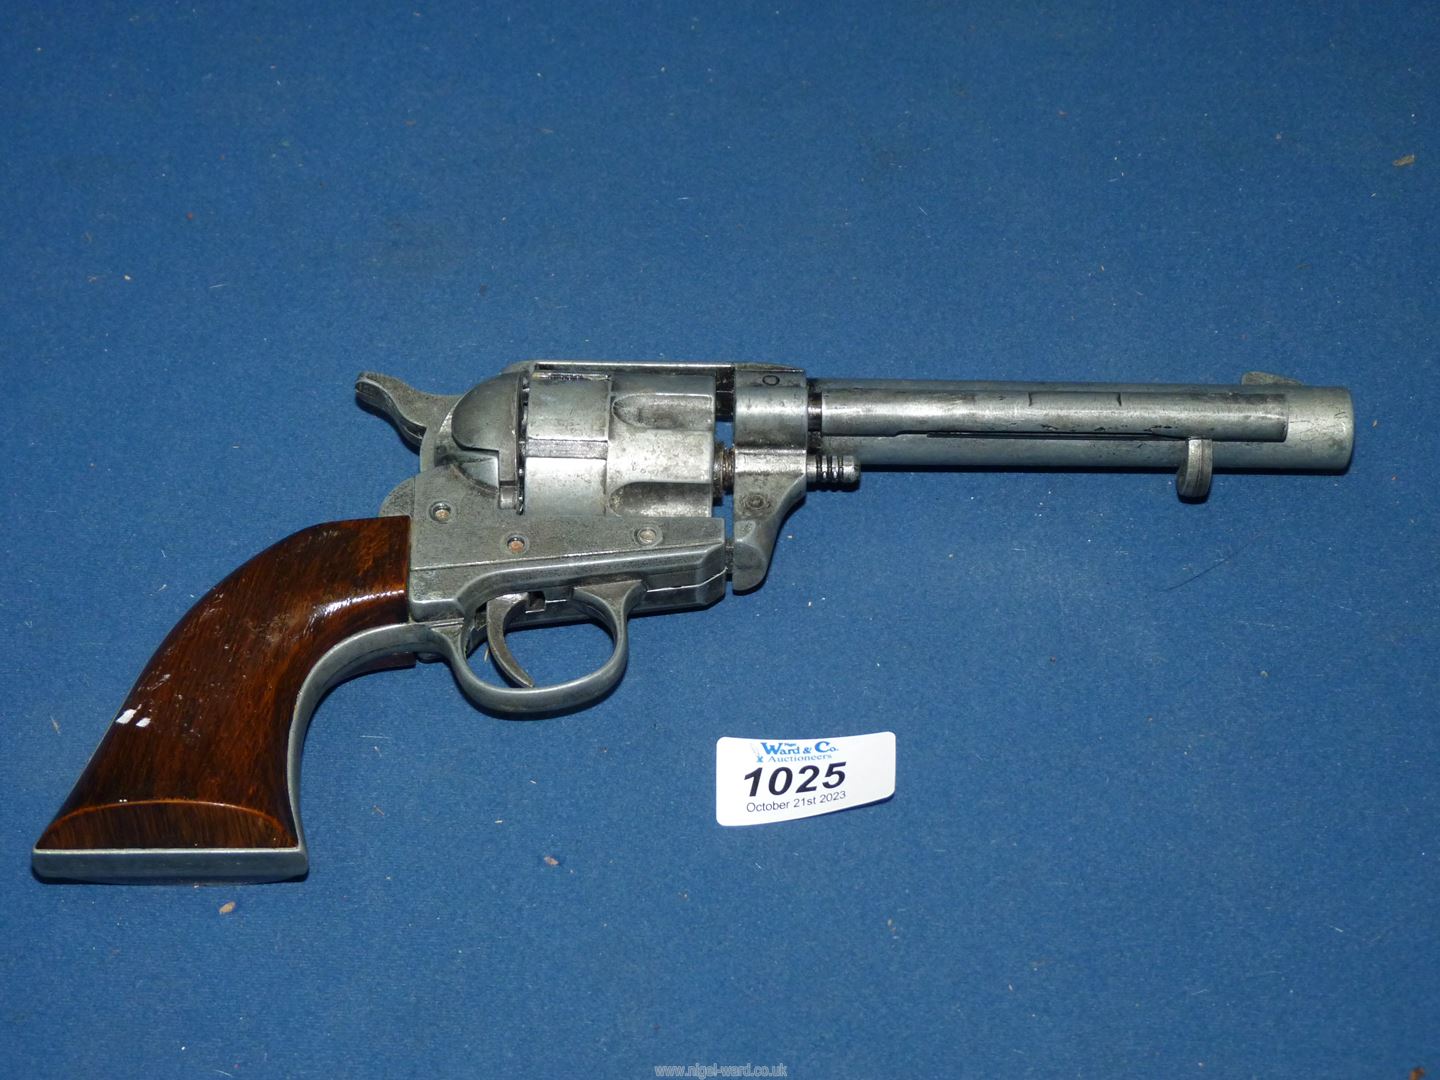 A replica Colt single action Army 45 pistol.